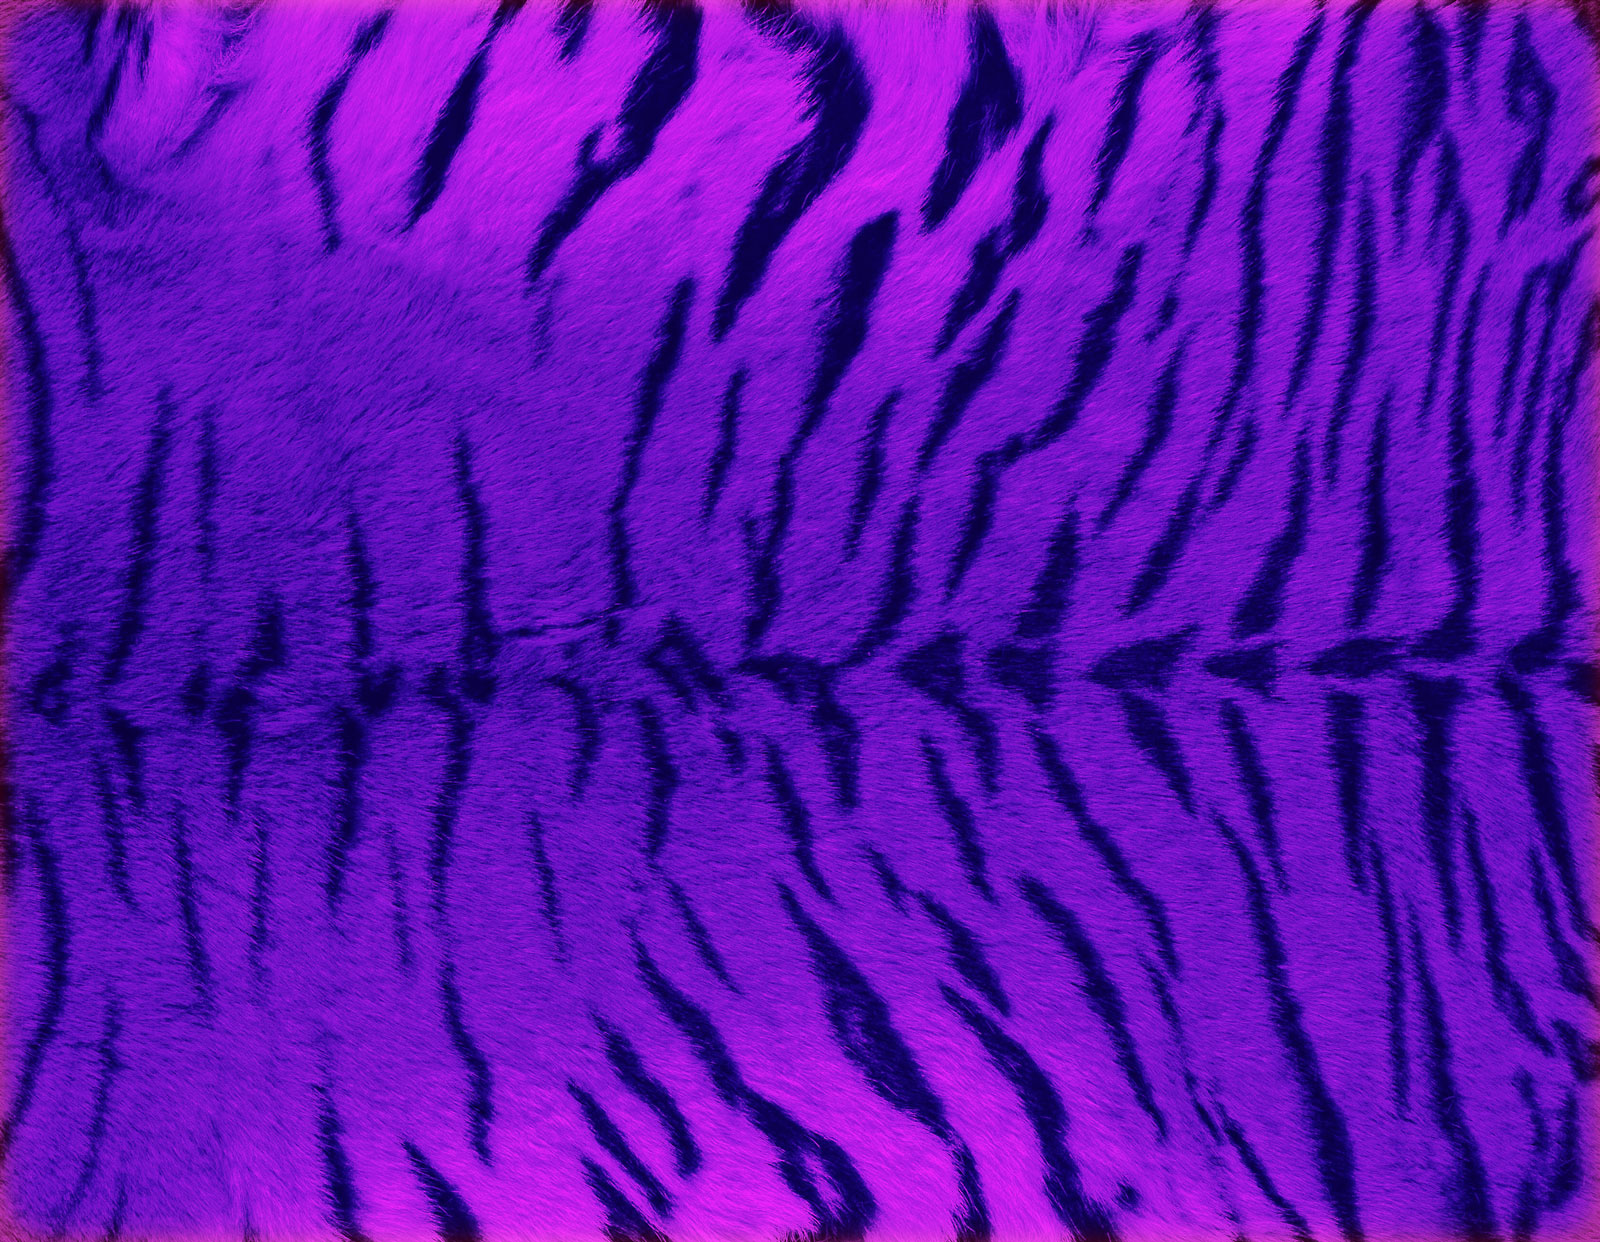 Purple Tiger Fur Photo Wallpaper Wall Mural Cn 241ve